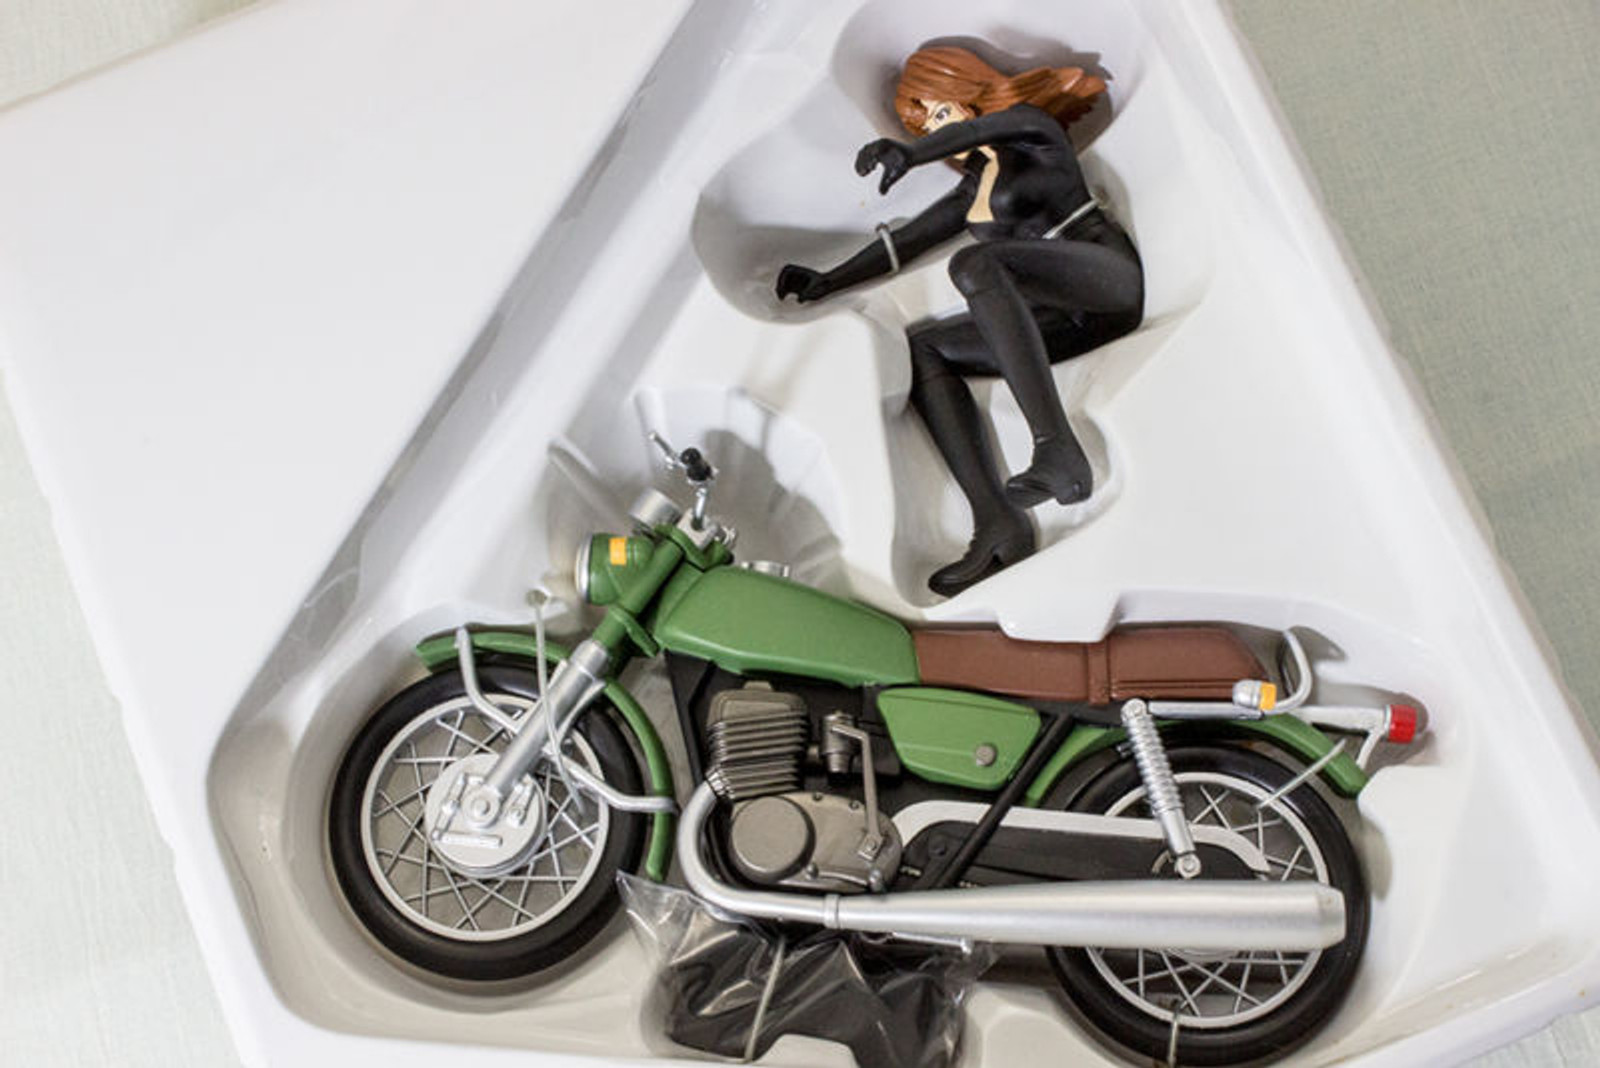 Lupin the Third (3rd) Fujiko Mine DX Figure & Bike (Motorcycle) Banpresto JAPAN ANIME MANGA